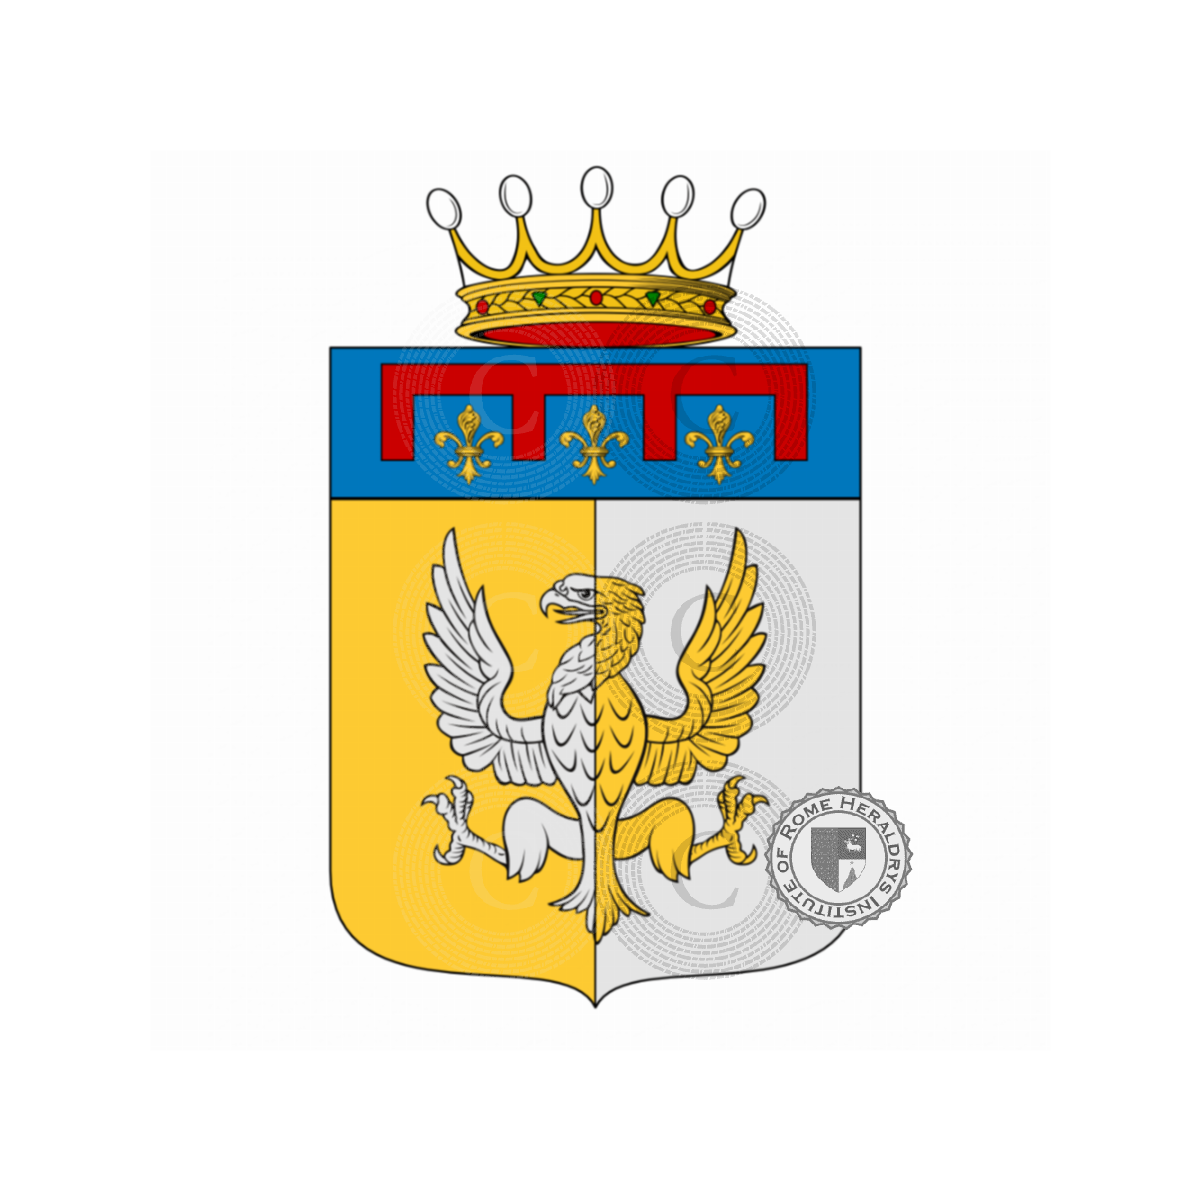 Escudo de la familiaParmegiani, Parmeggiani,Parmigiani